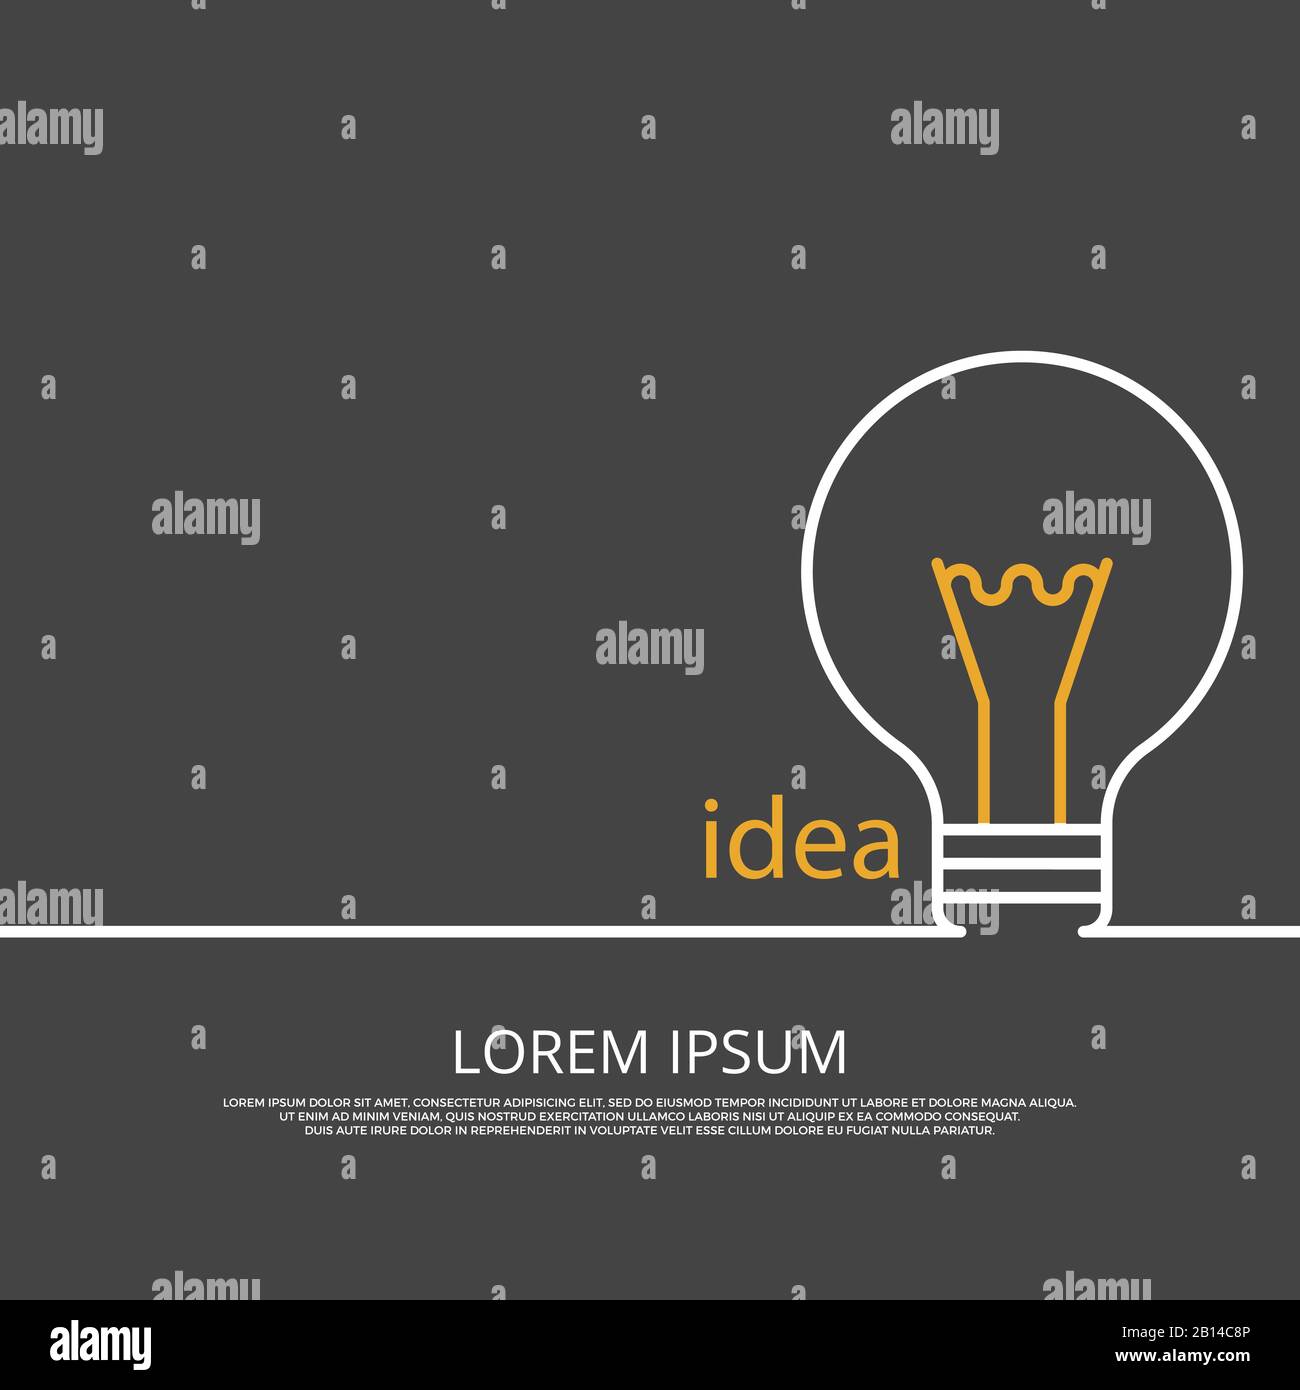 Idea concept background with light bulb. Technology innovation, vector illustration Stock Vector